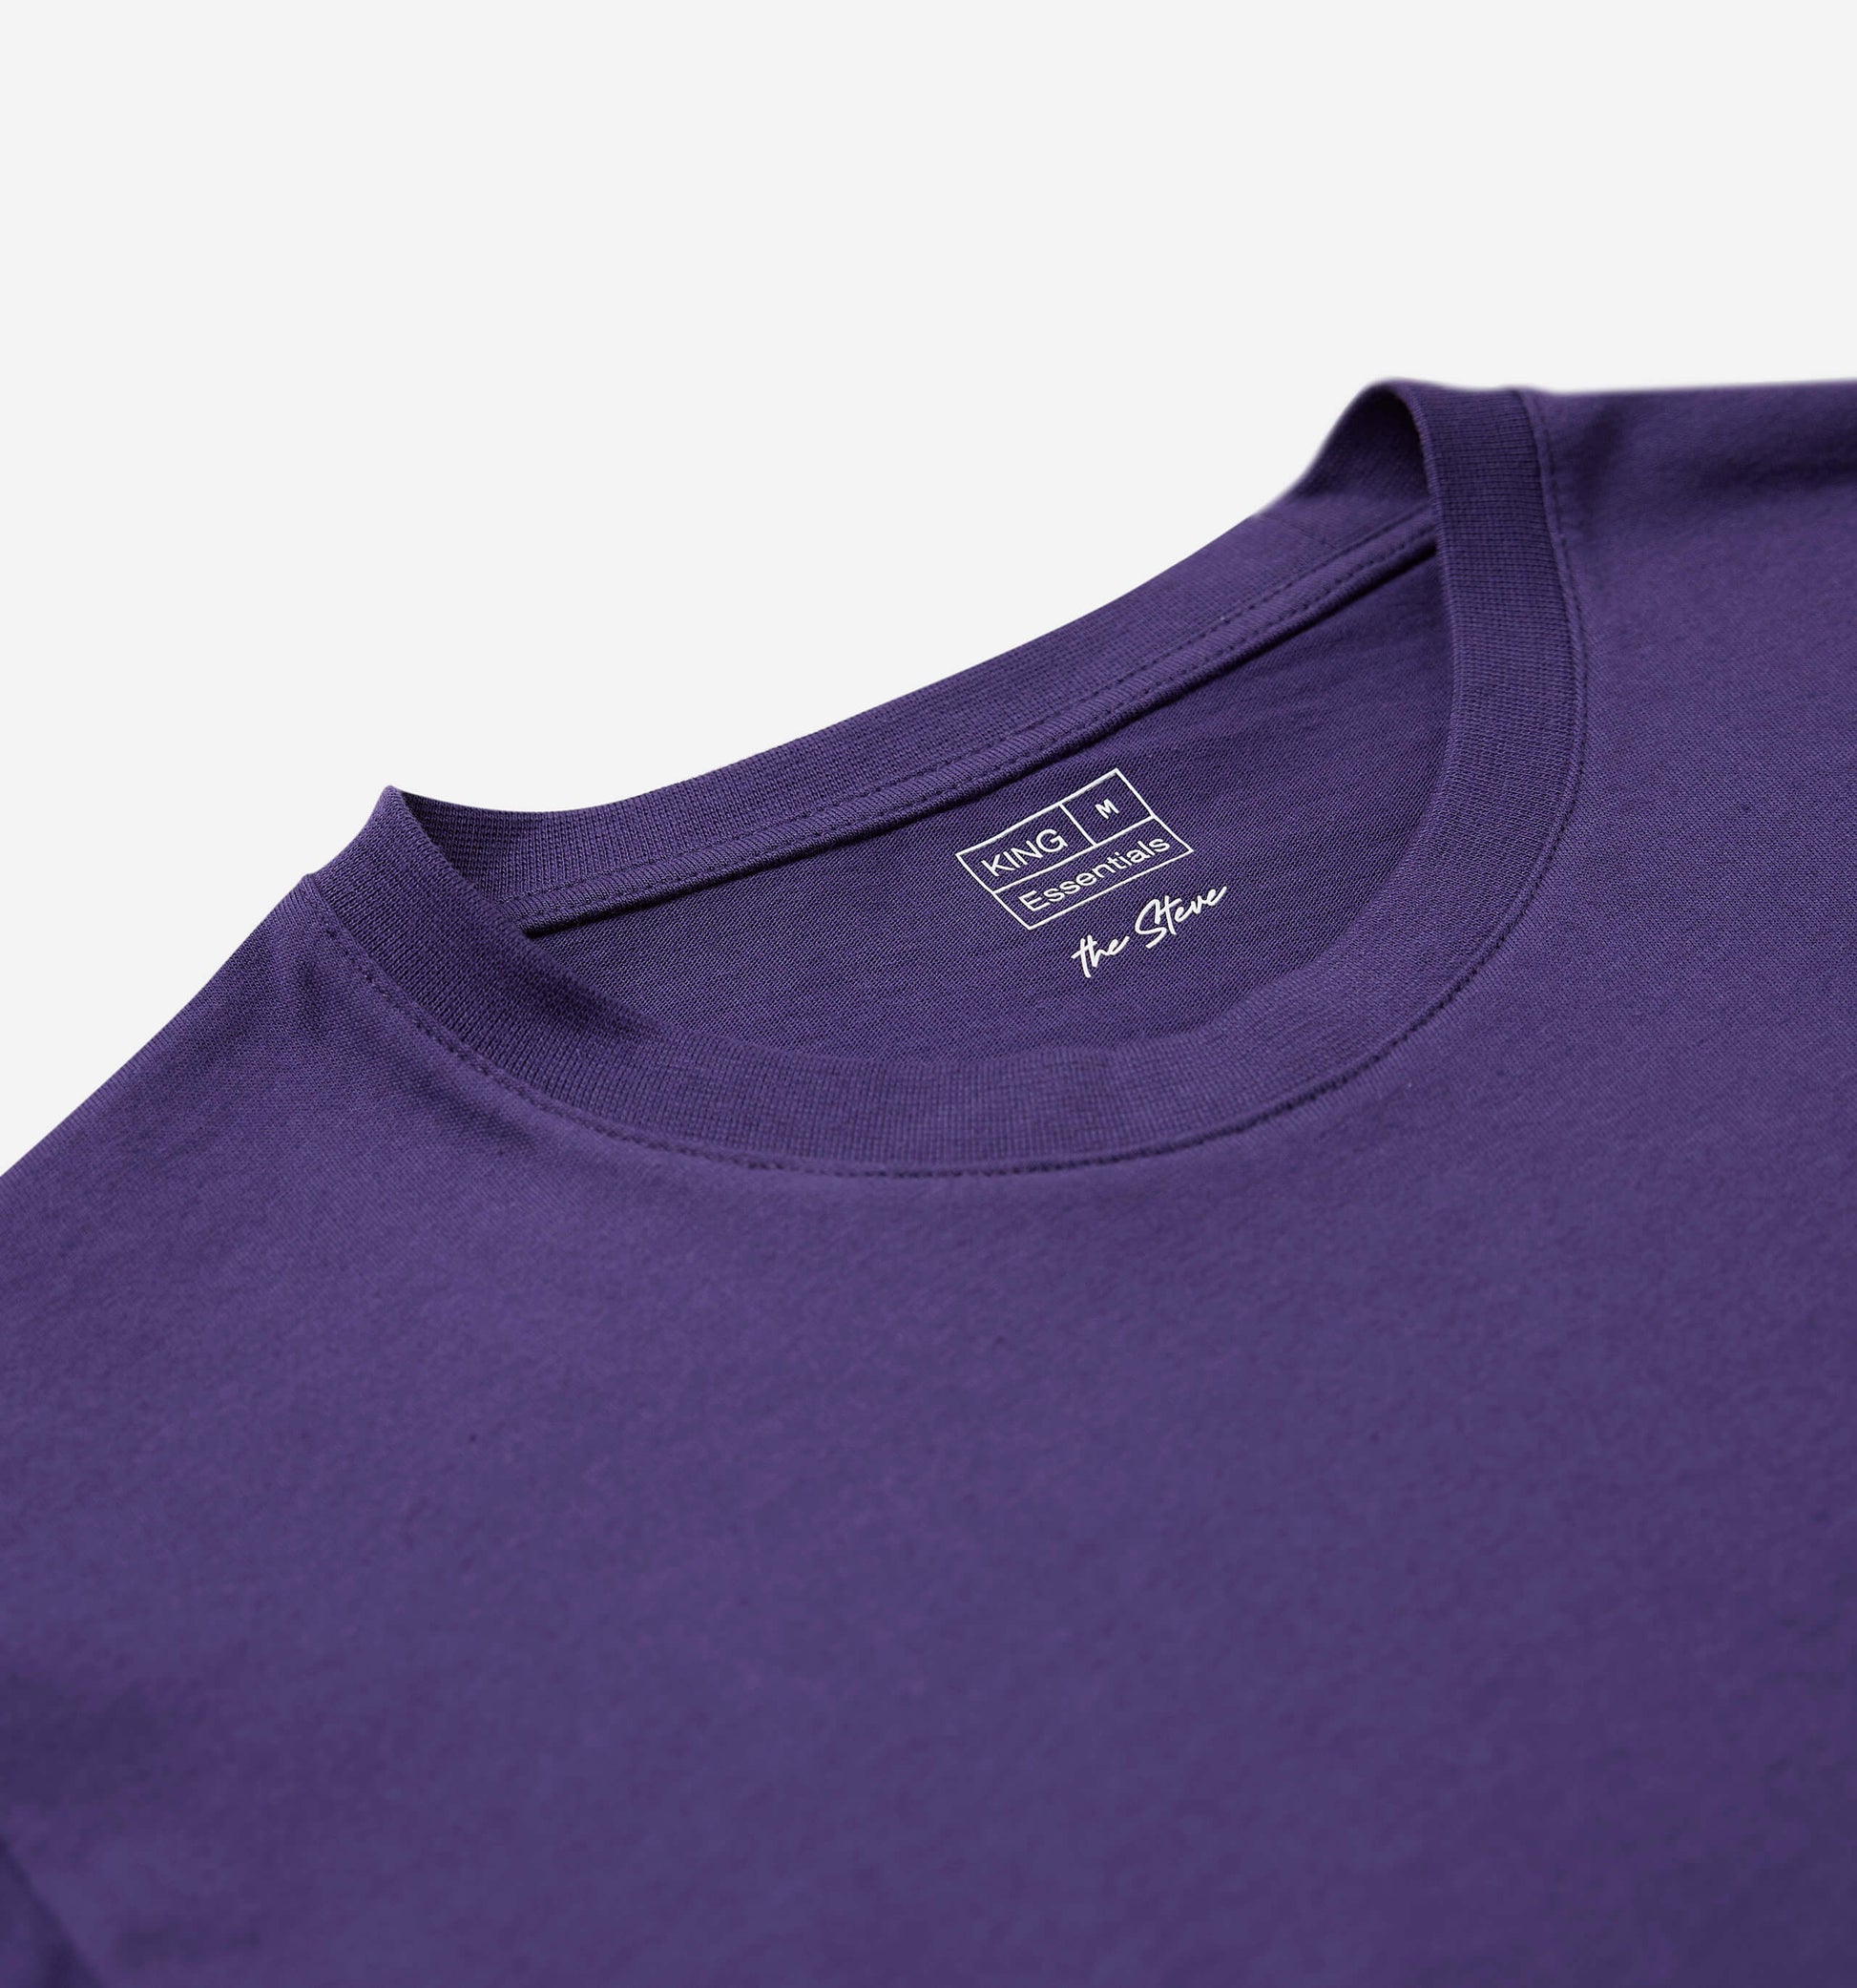 The Steve - Basic Cotton T-shirt In Dark Purple From King Essentials